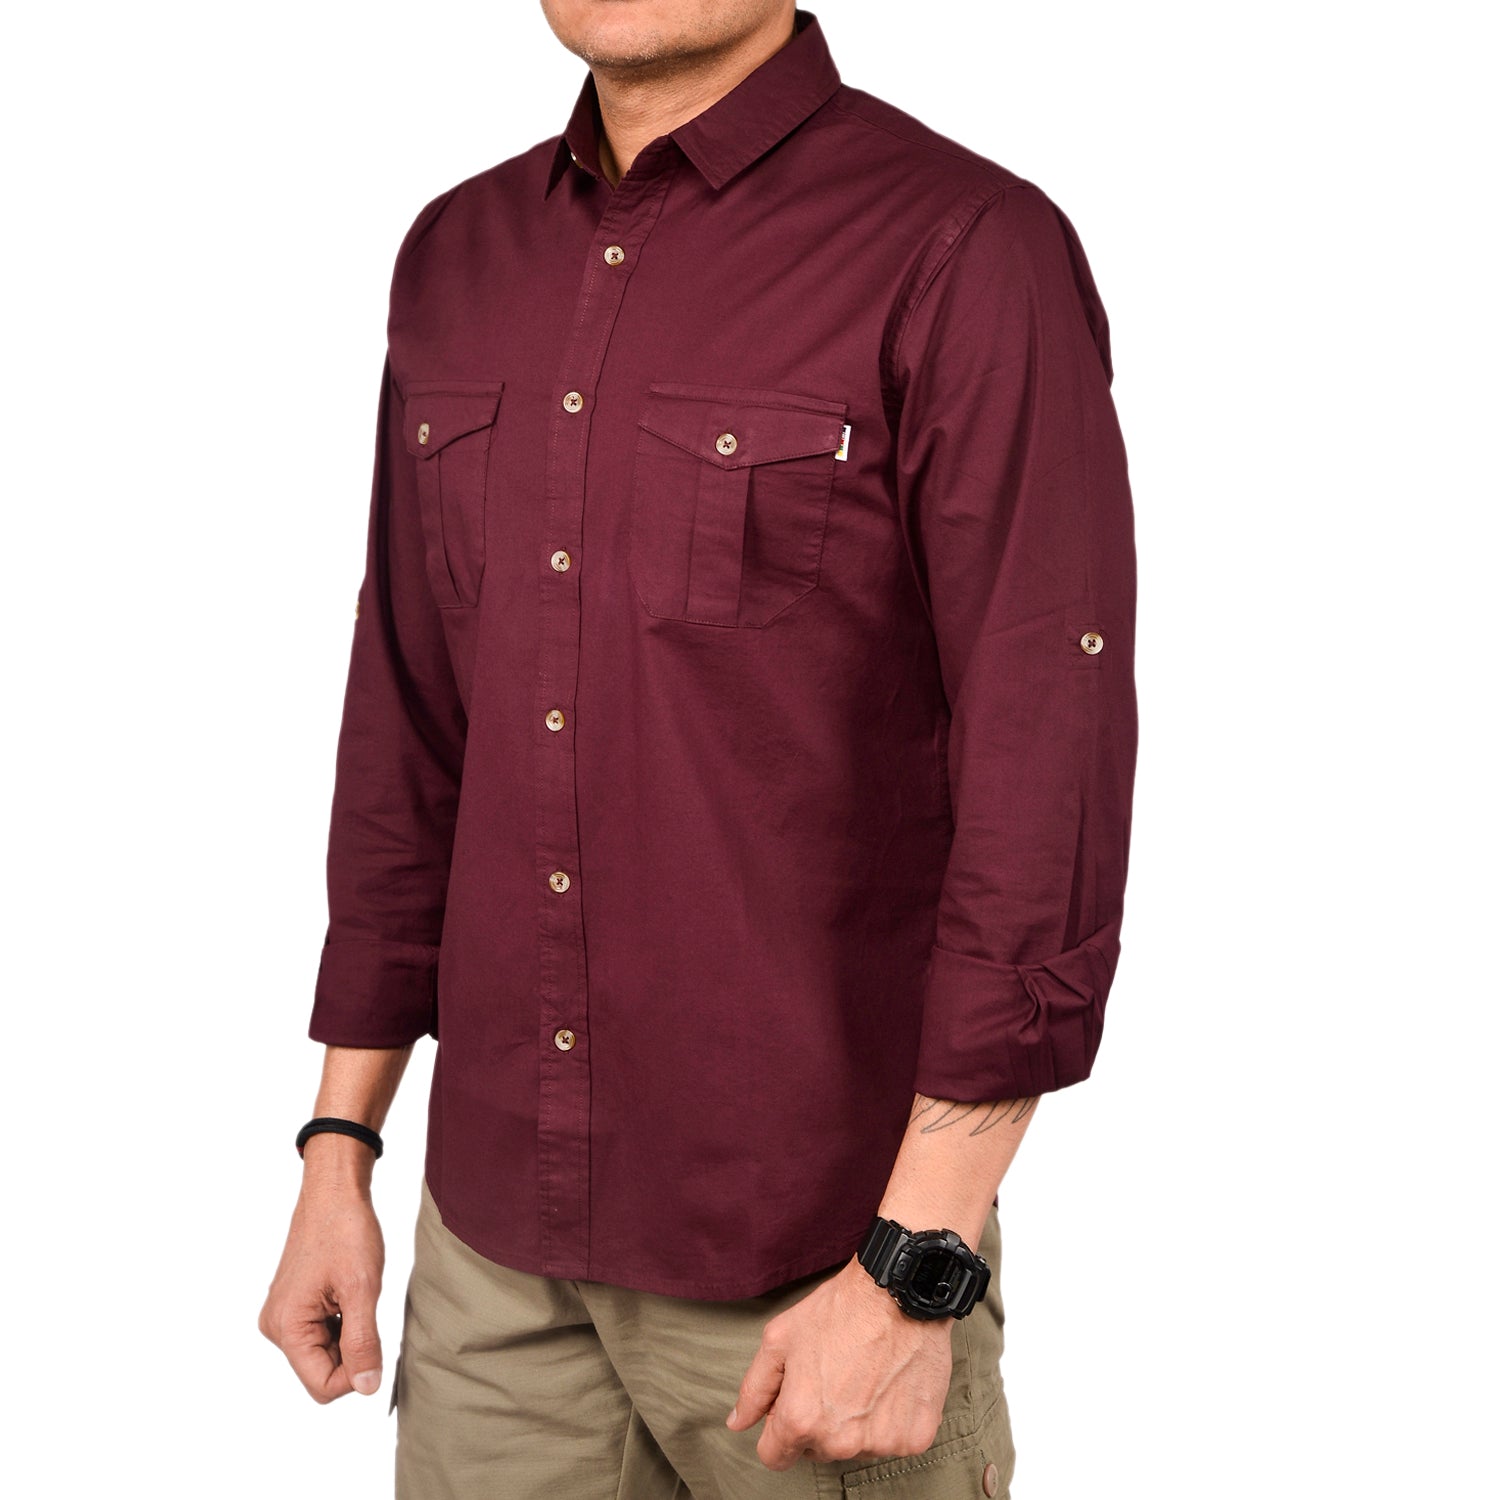 Buy Corbett Cargo Full Sleeve Shirt at Gokyo Outdoor Clothing & Gear